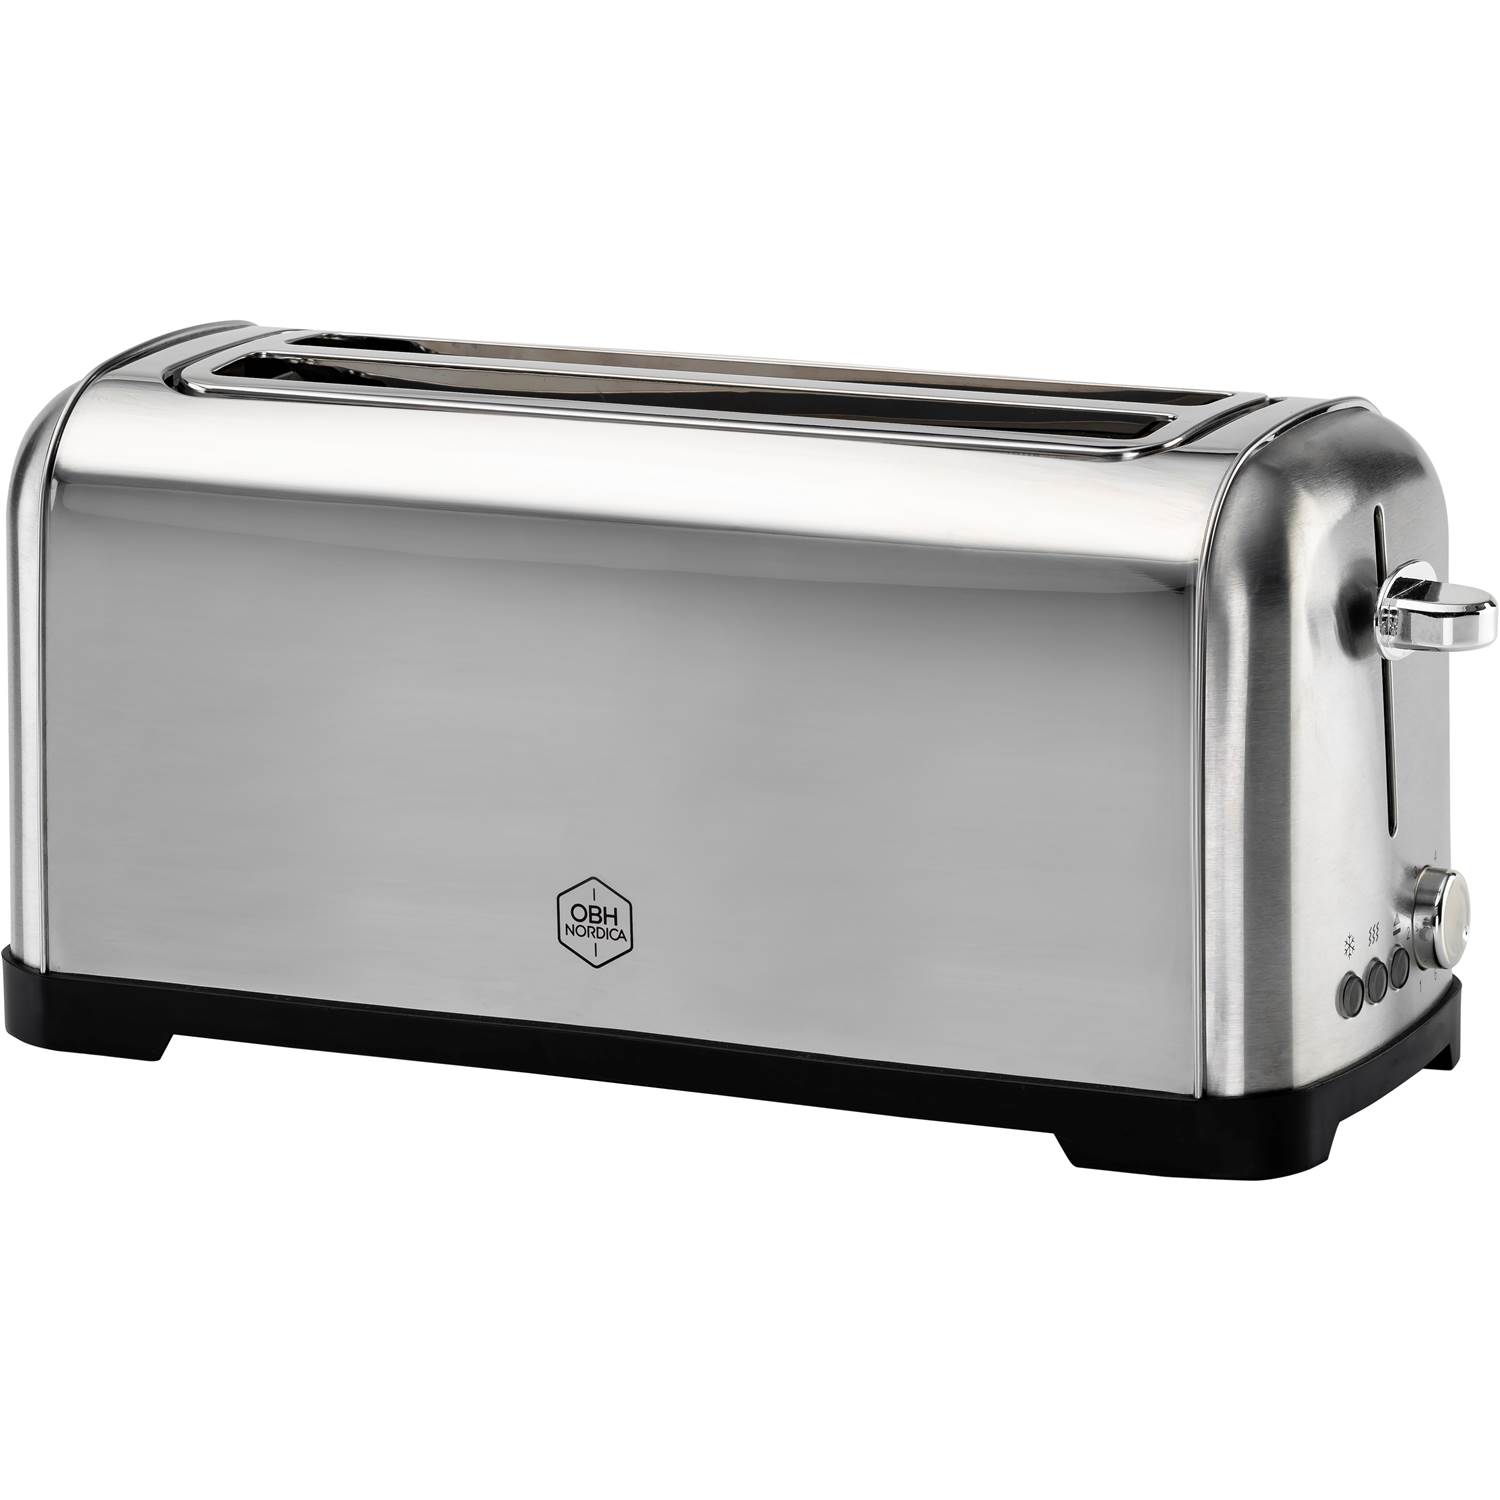 OBH Nordica Toaster 4 Slice 2273